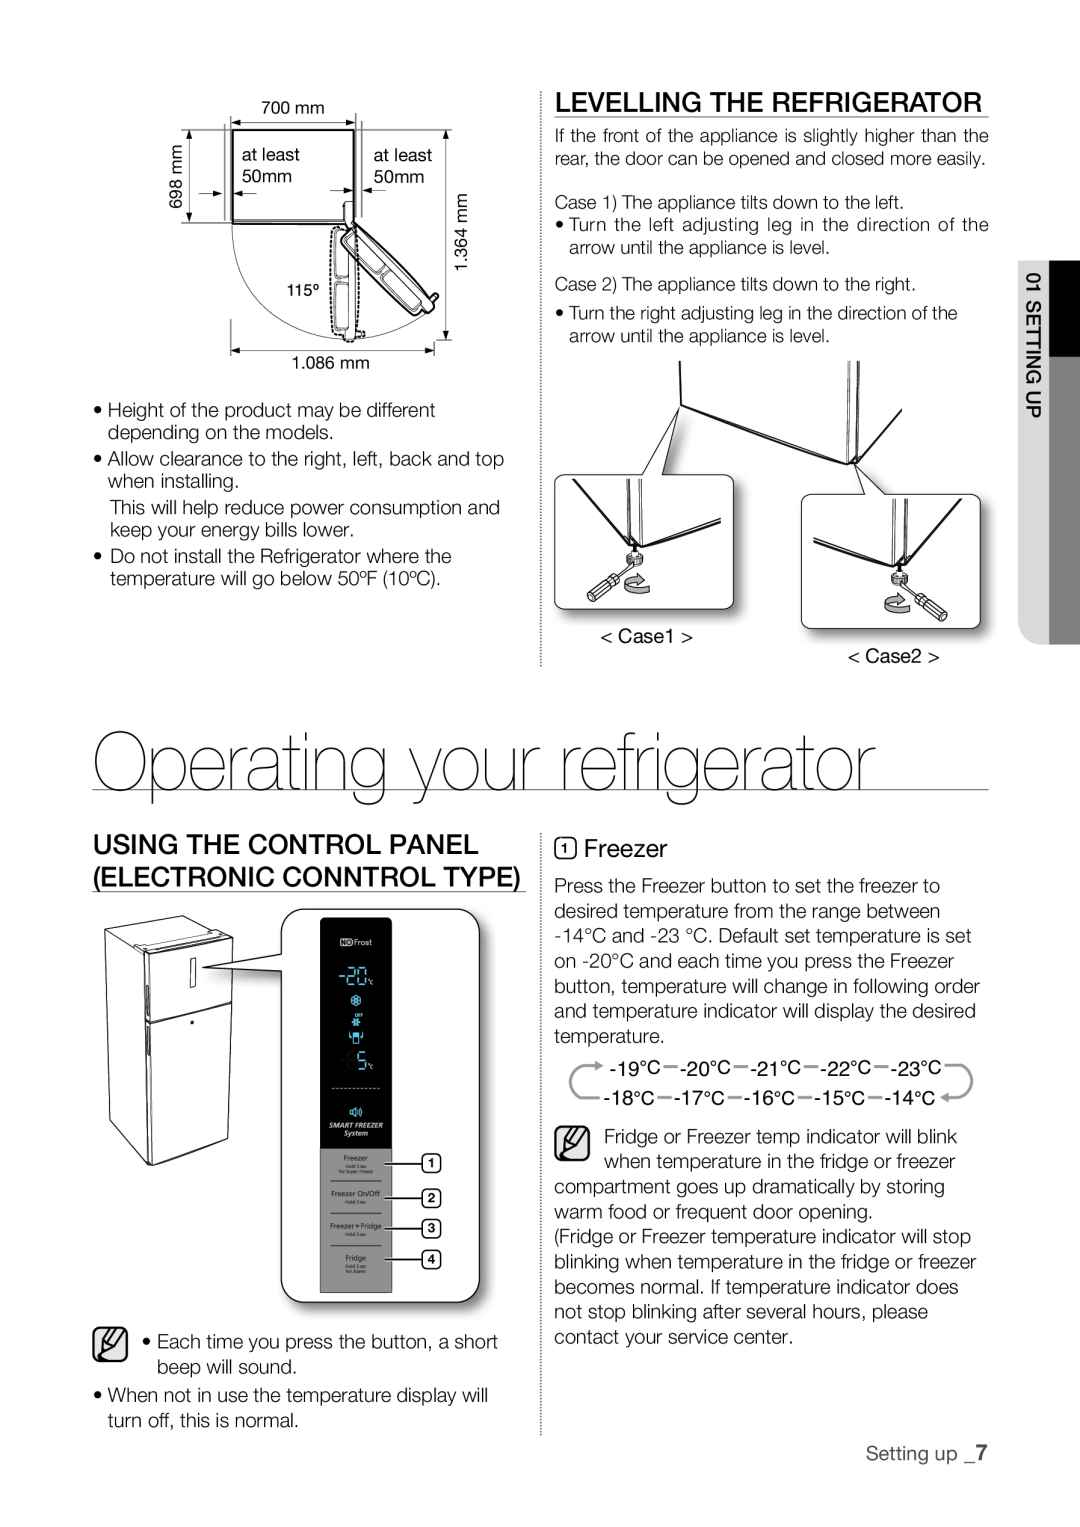 Samsung RT60KZRSL1/ZAM Levelling The Refrigerator, Using The Control Panel Electronic Conntrol Type, Freezer, Setting up 